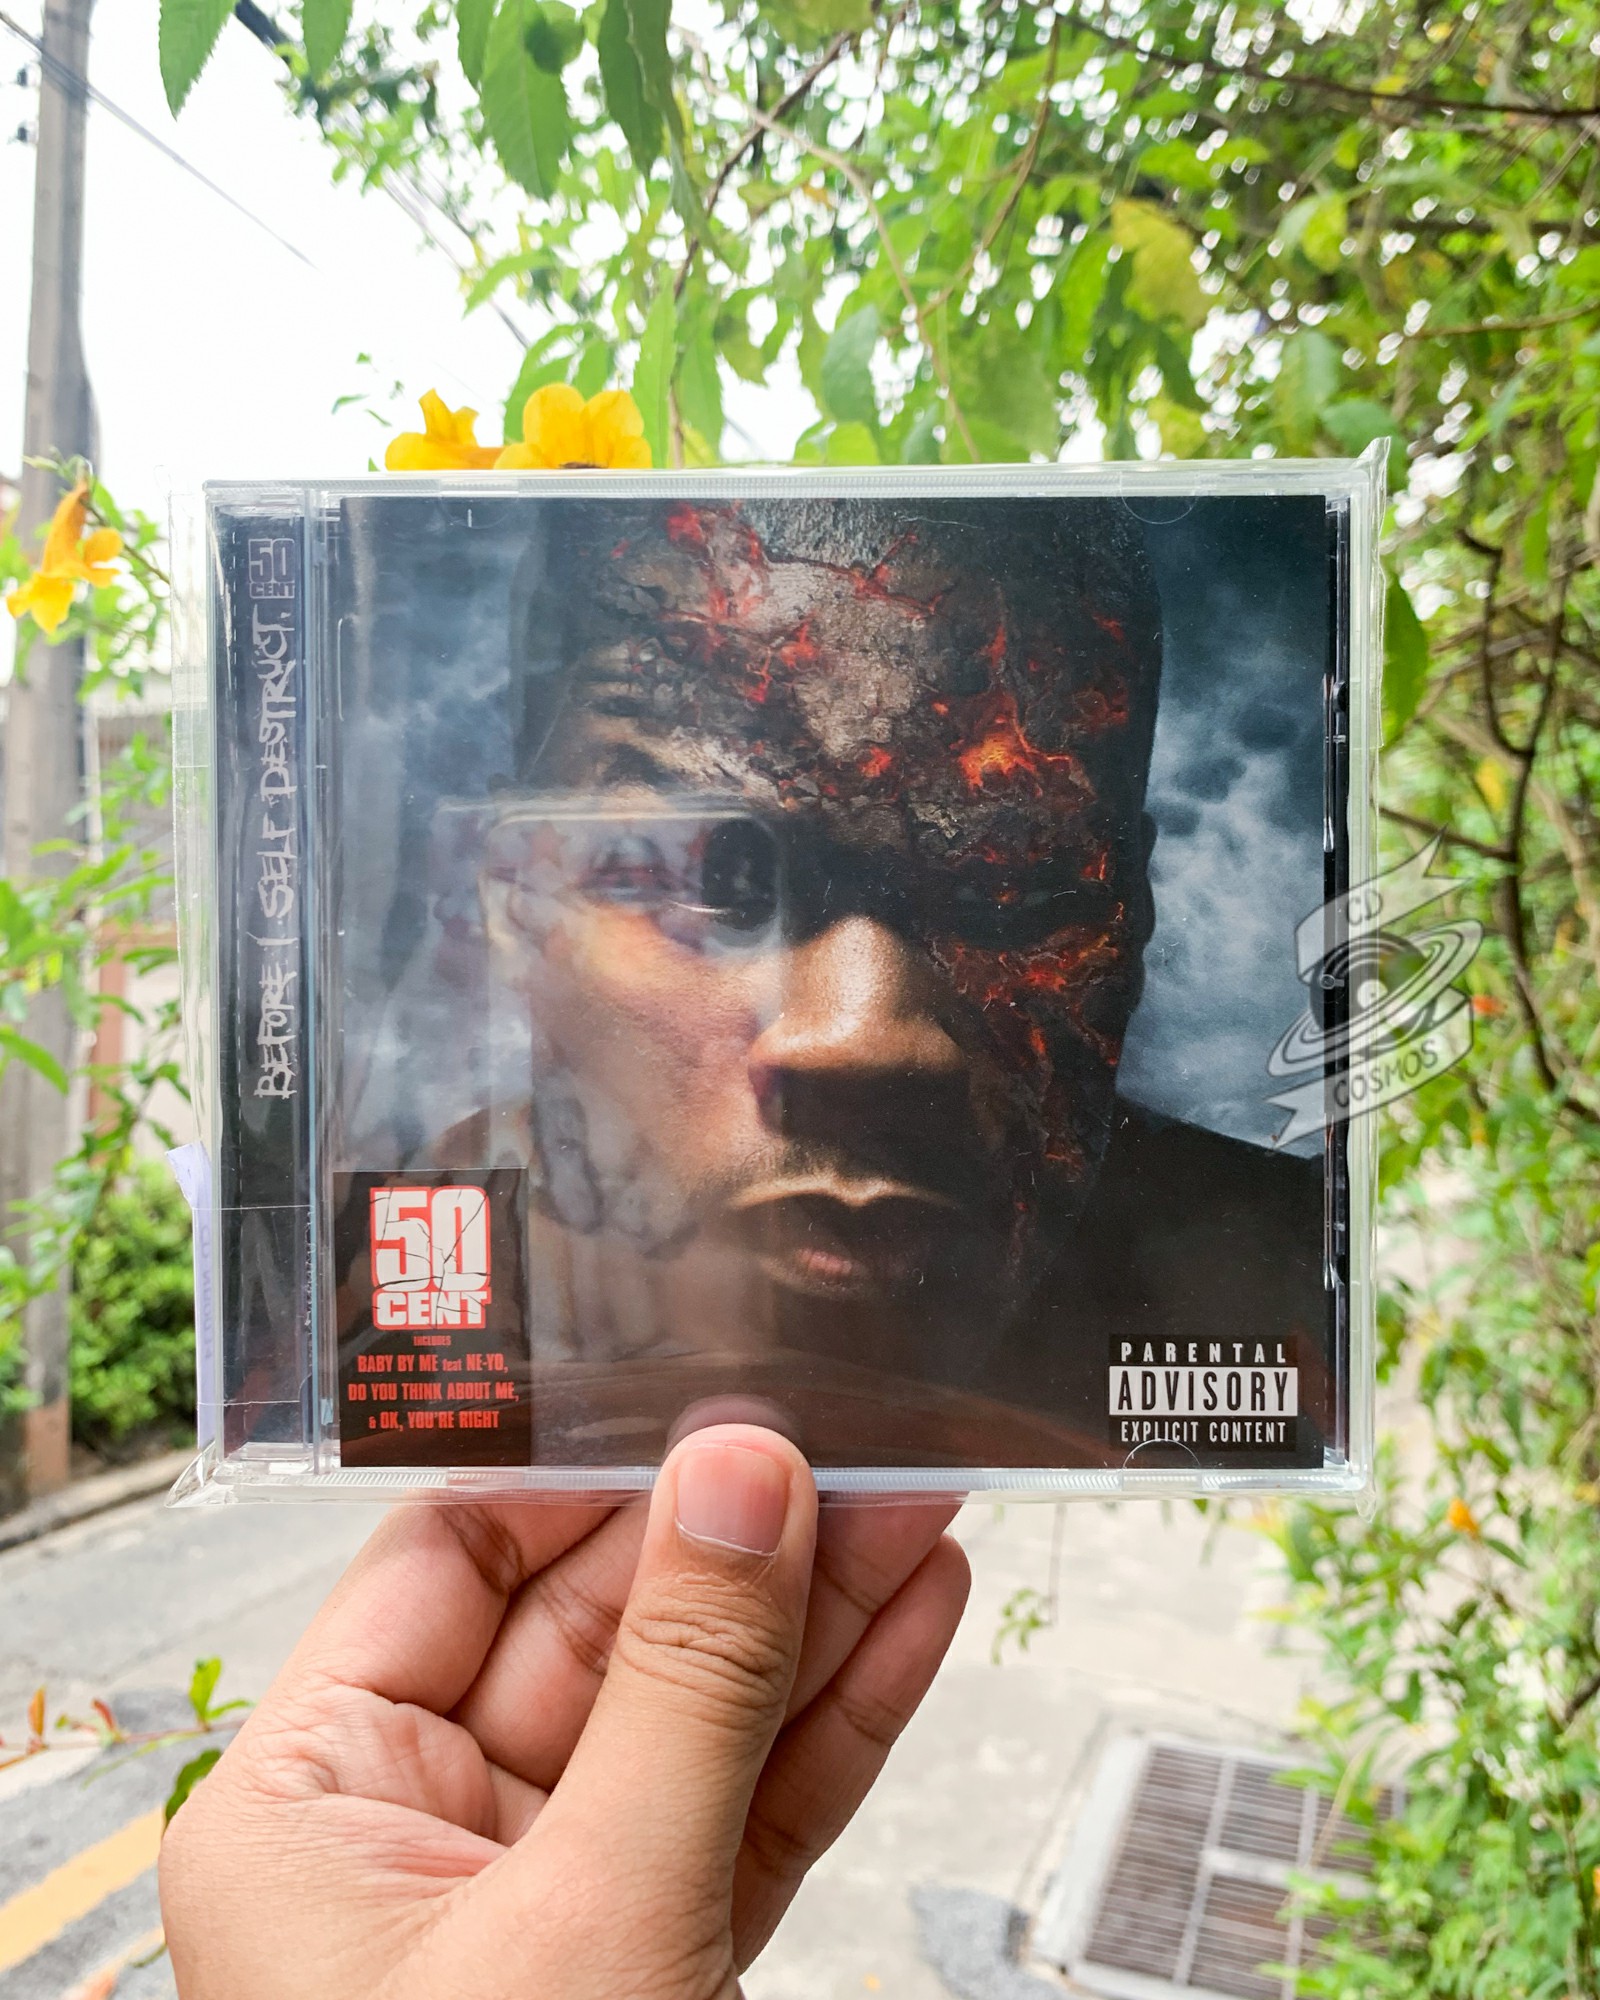 50 Cent Before I Self Destruct Japanese Promo Cd Album UICS-9115 Before I  Self Destruct 50 Cent 451984